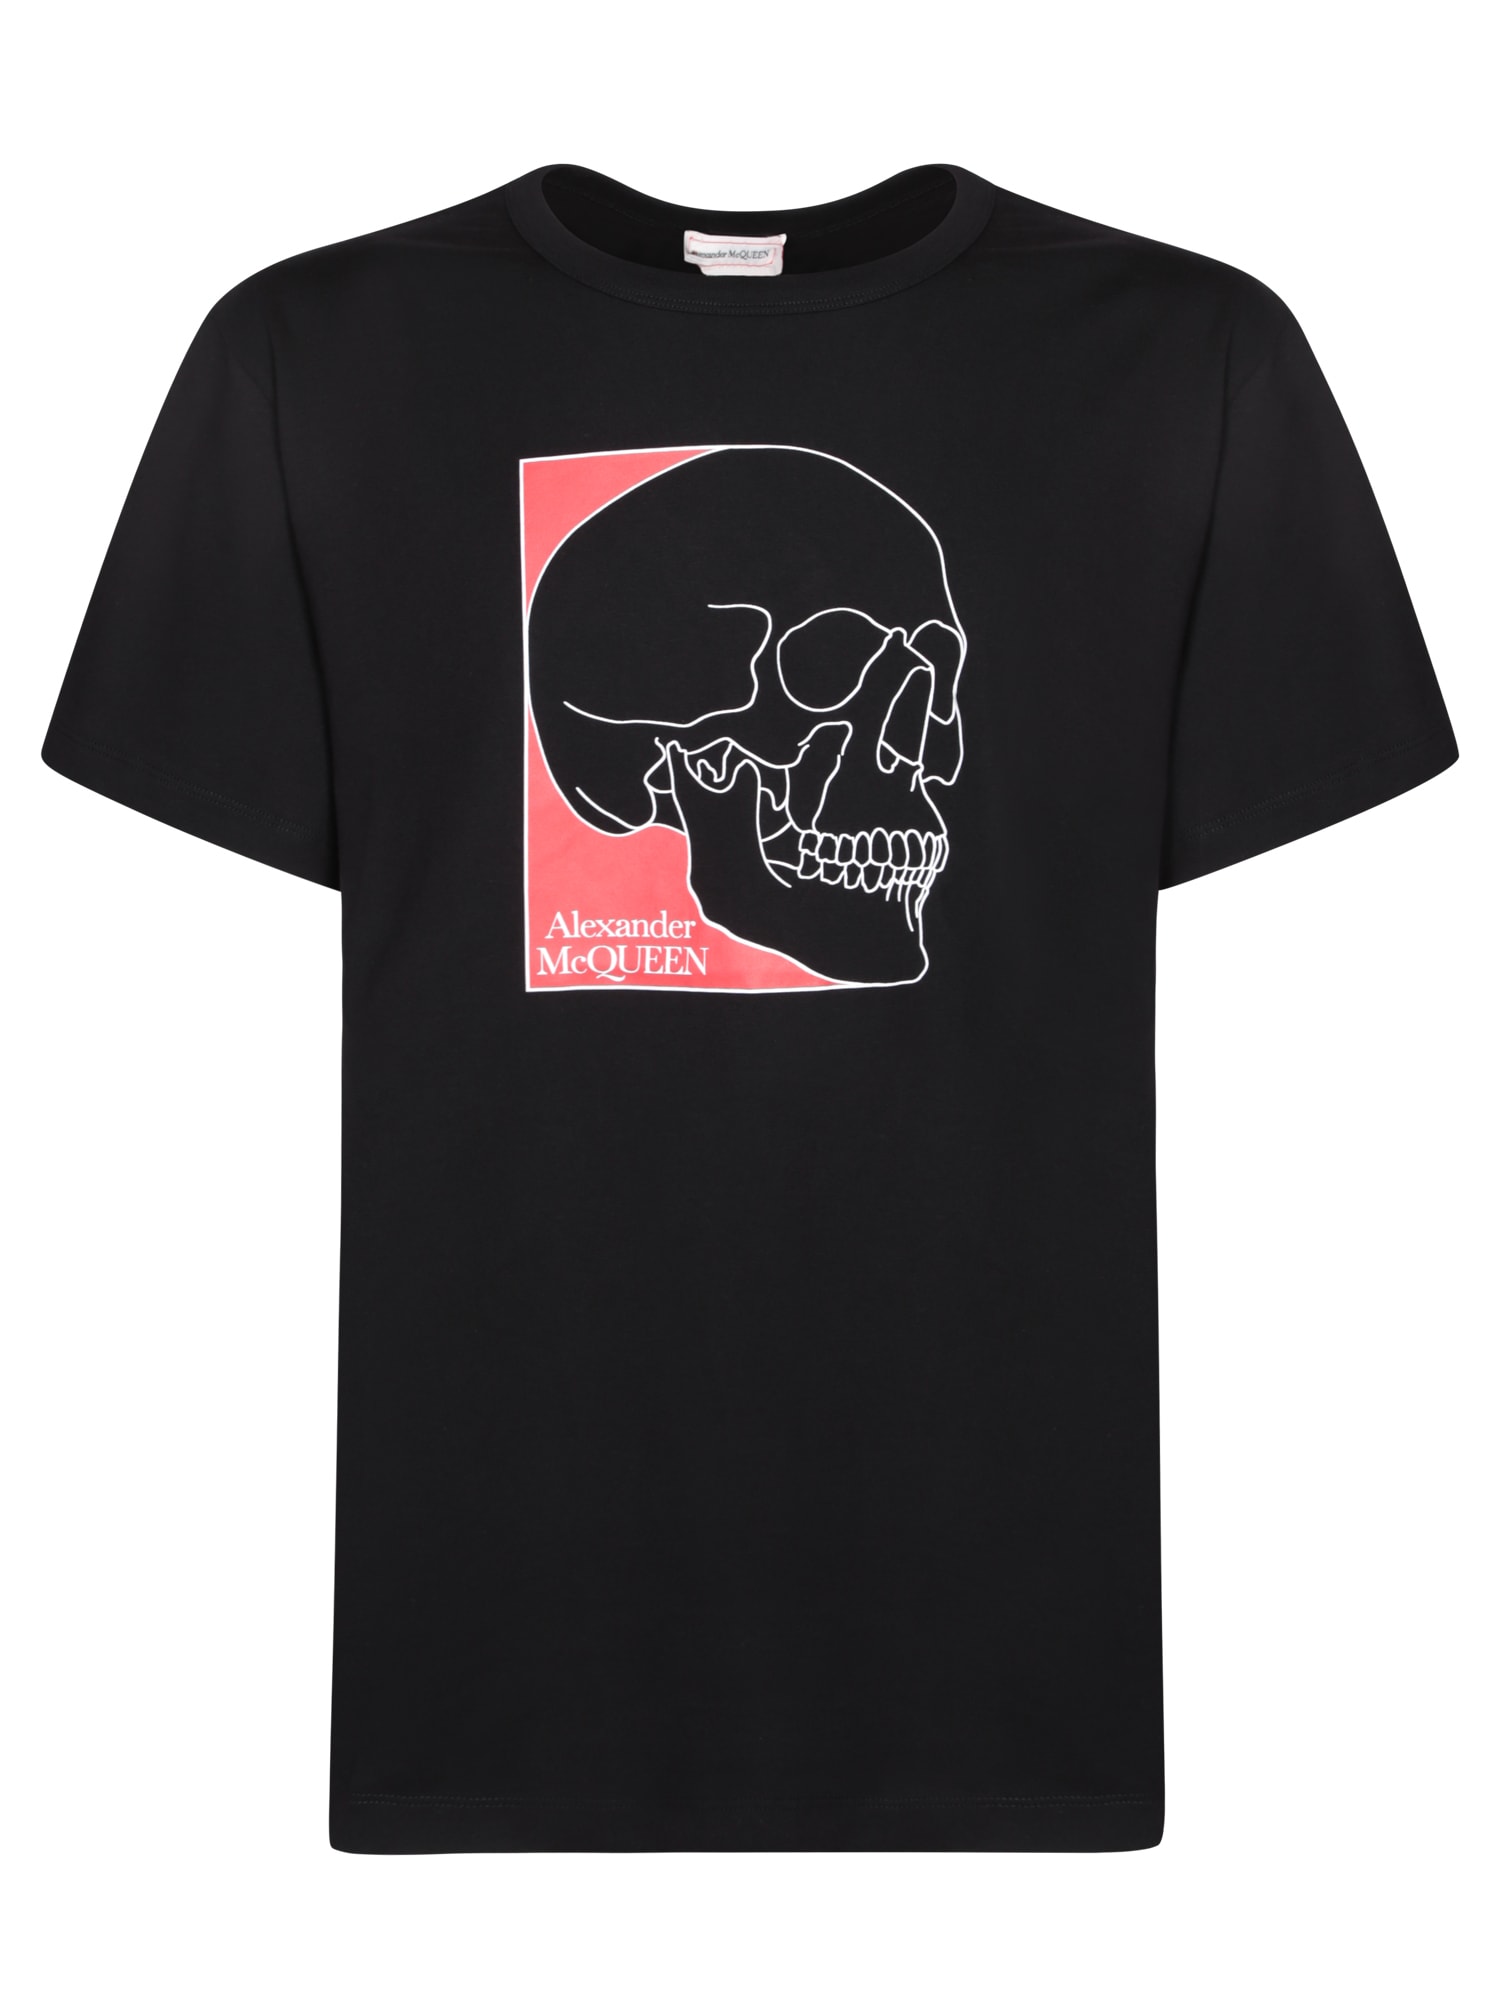 Skull Print T-shirt